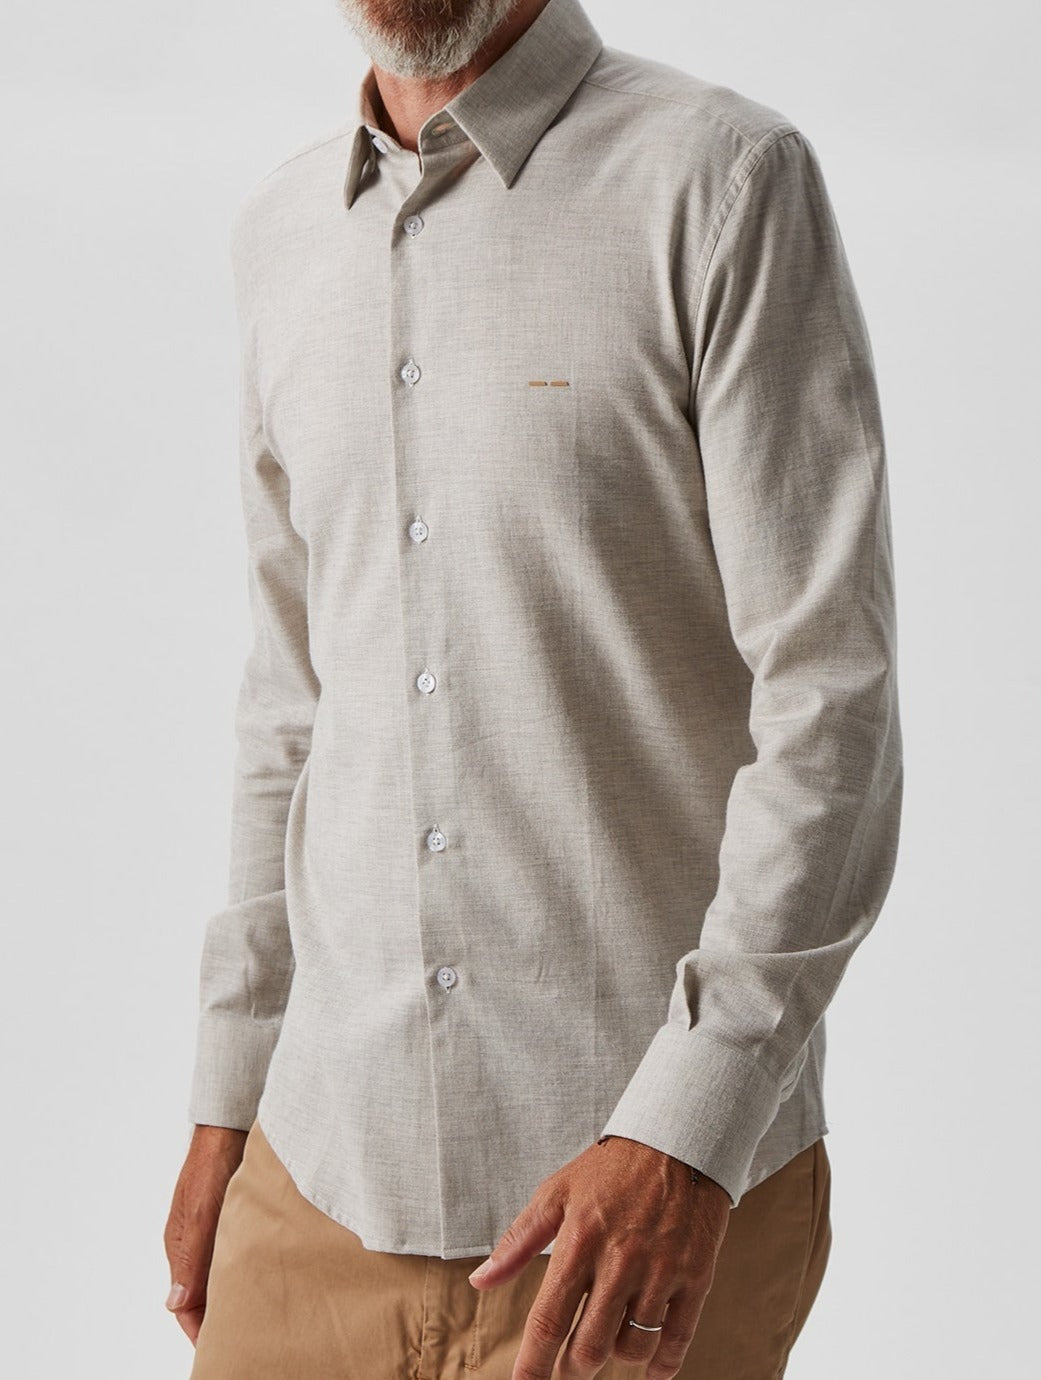 Men Shirt | Sand Flannel-Like Cotton Twill Shirt by Spanish designer Adolfo Dominguez